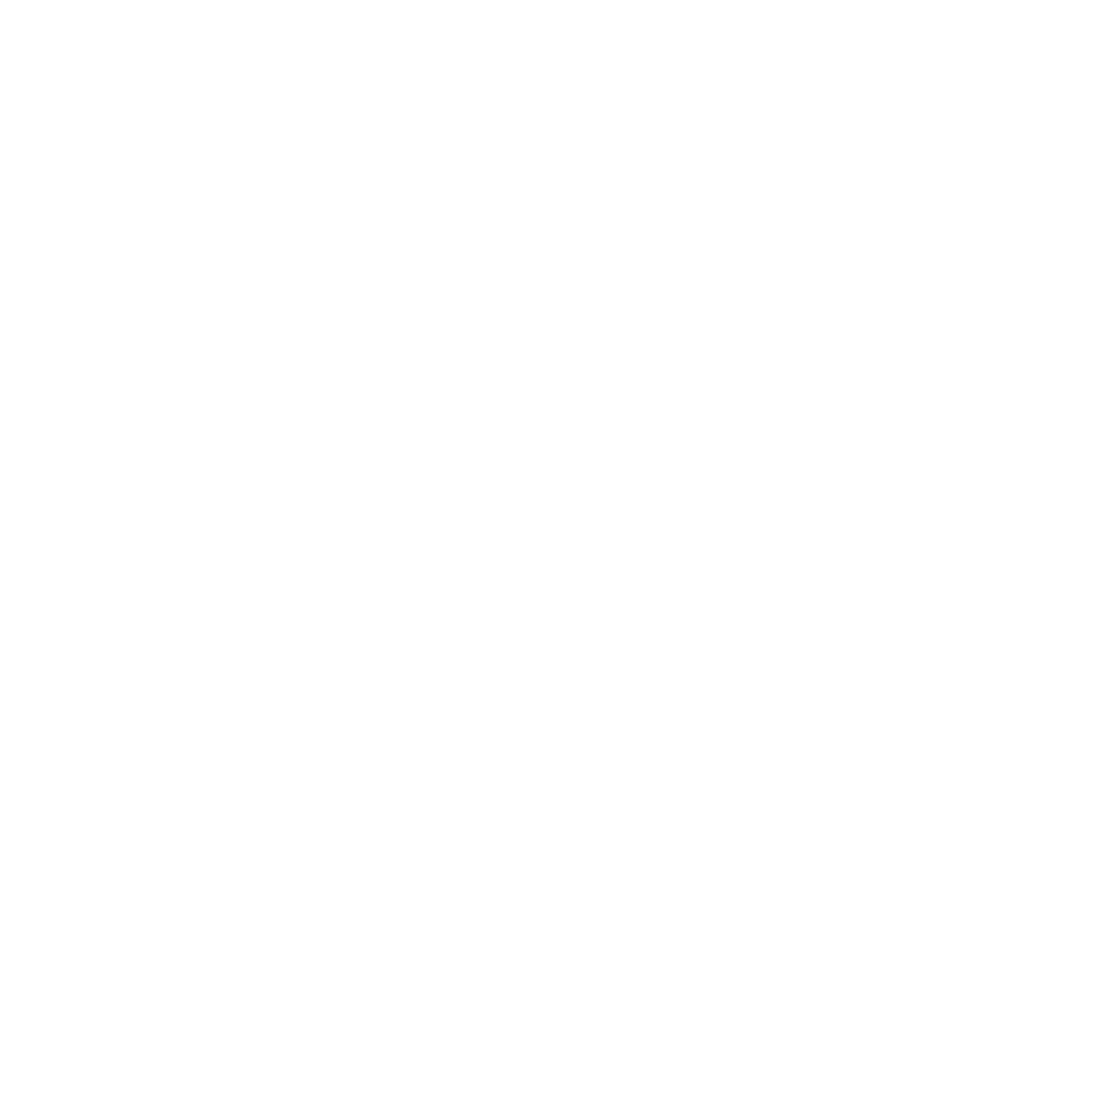 2525 - Teapot (1110x1100), Png Download